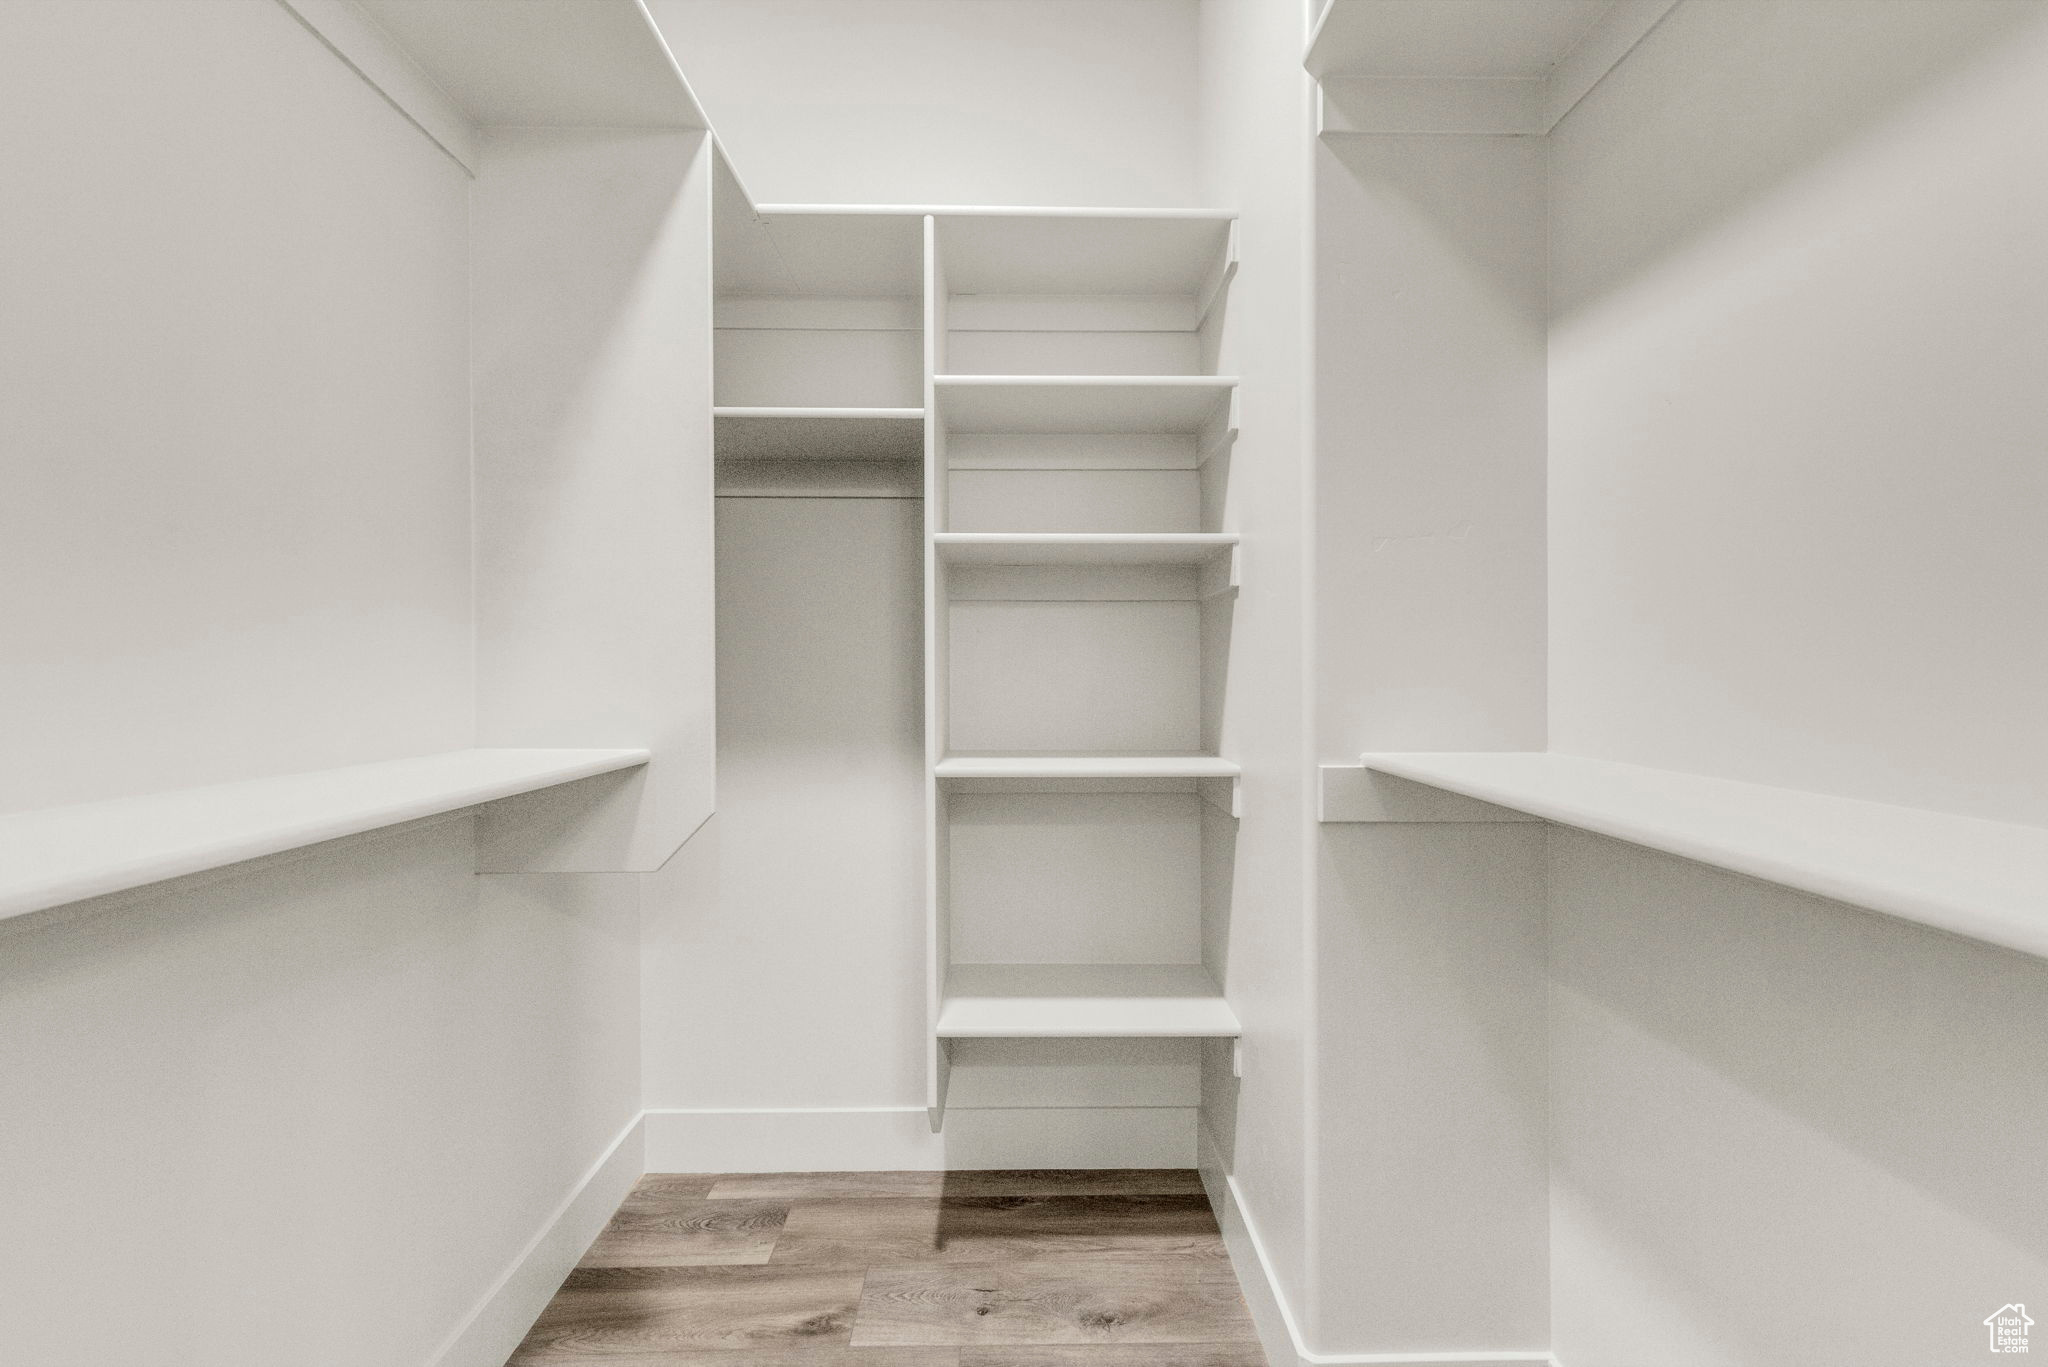 Spacious closet with light wood-type flooring